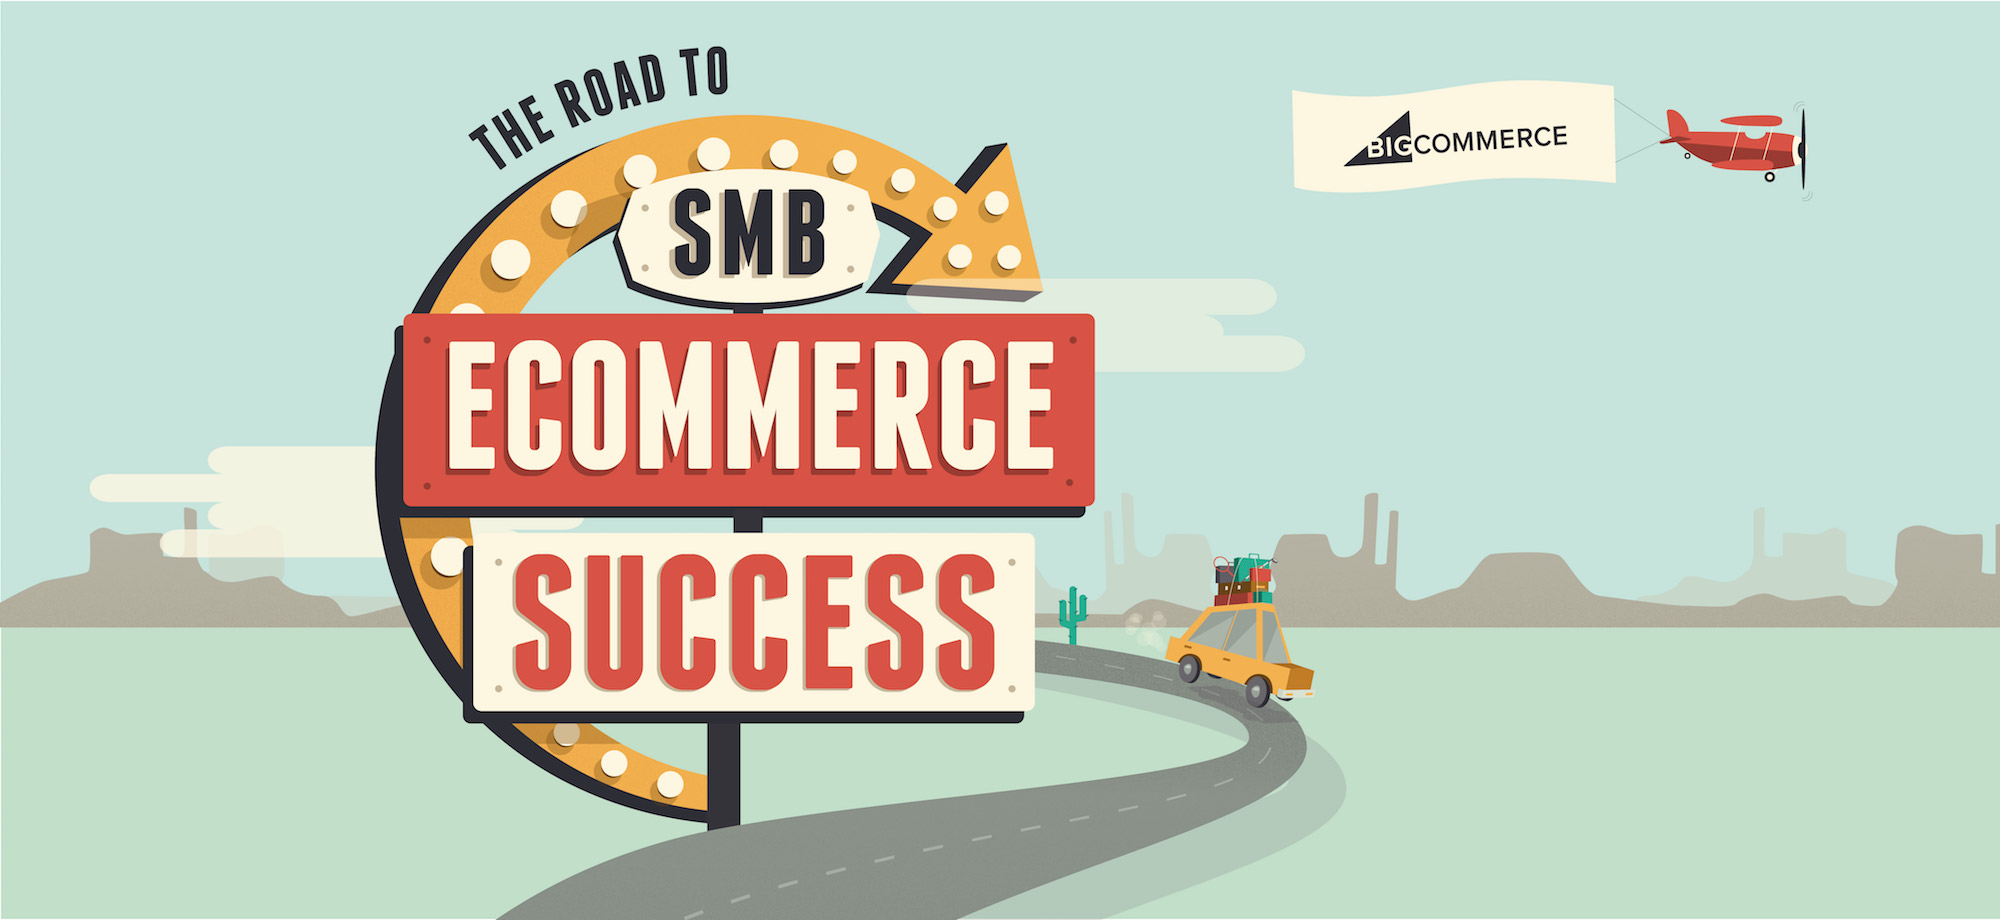 success in e-commerce business